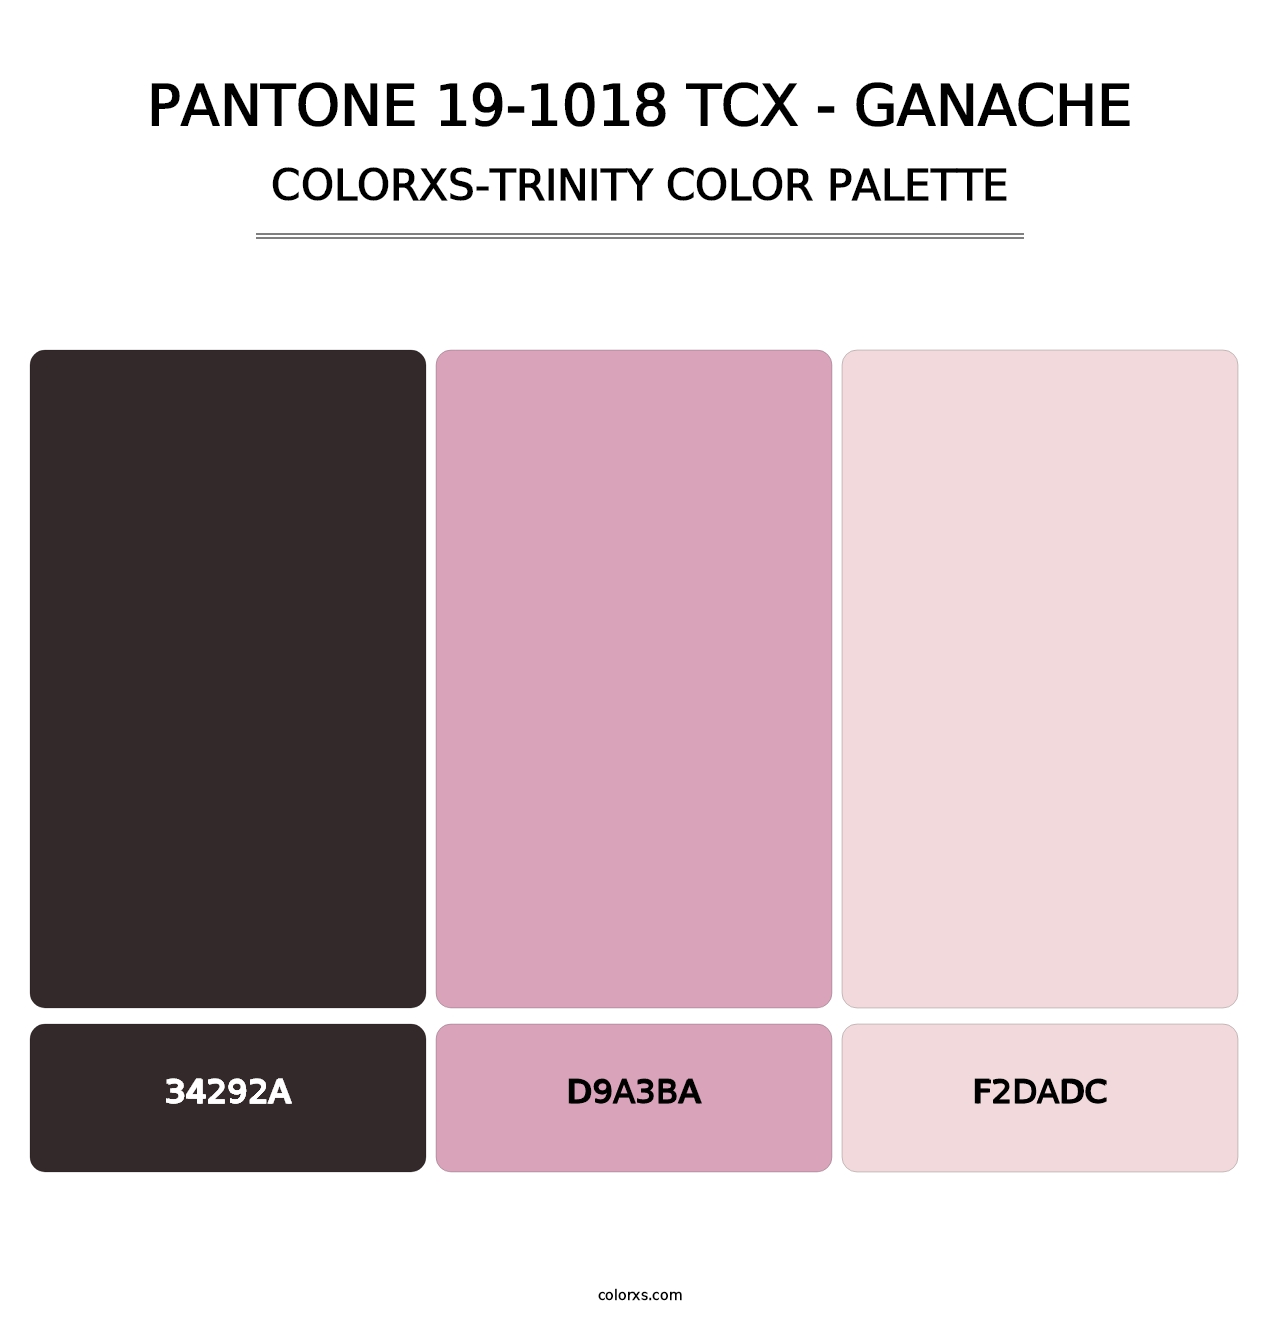 PANTONE 19-1018 TCX - Ganache - Colorxs Trinity Palette